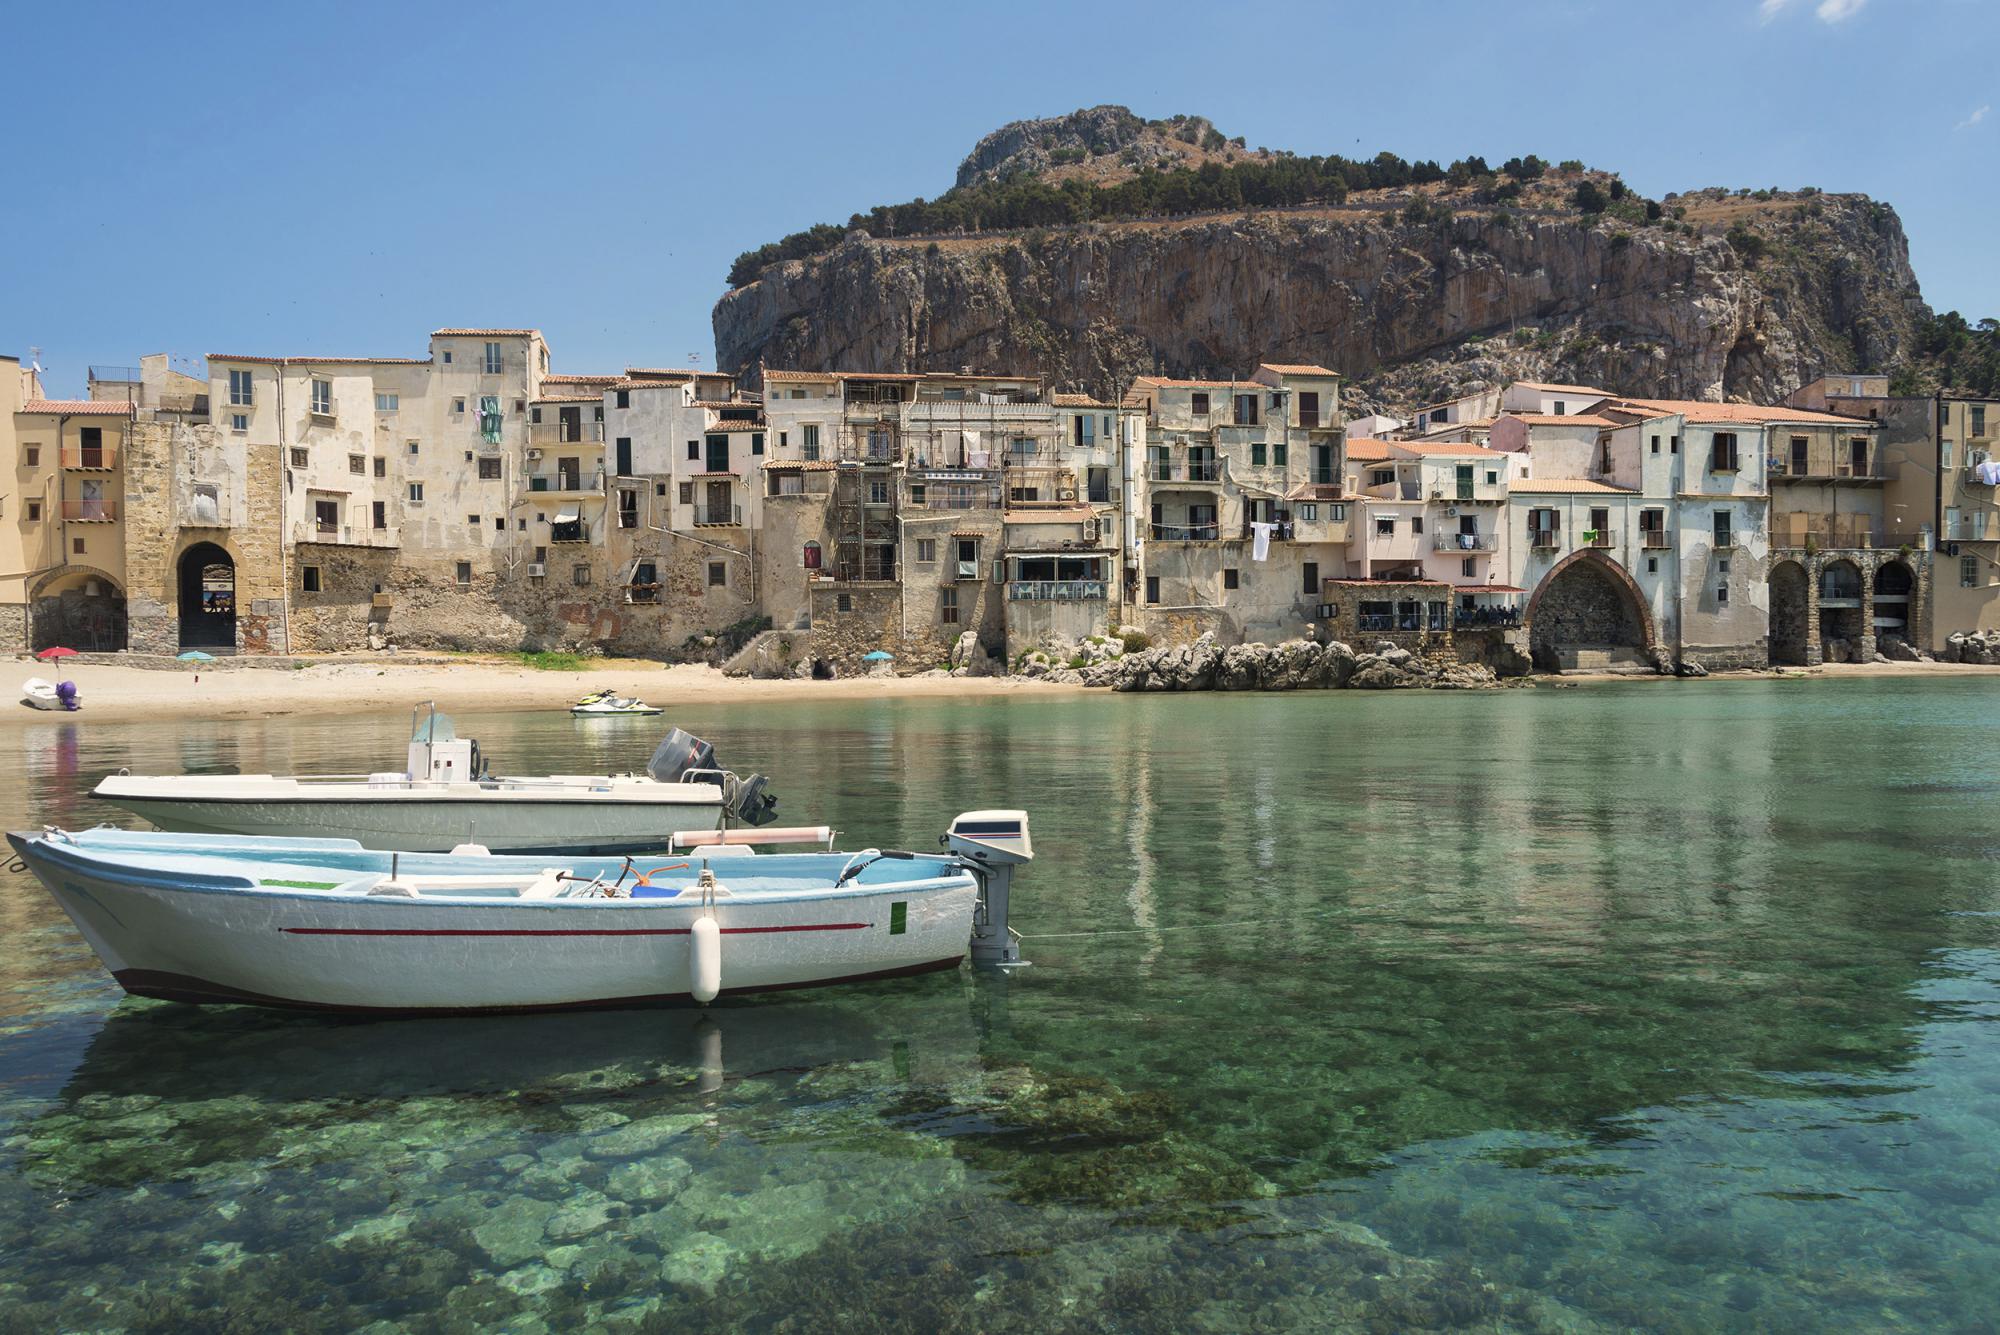 The northern Sicilian coast